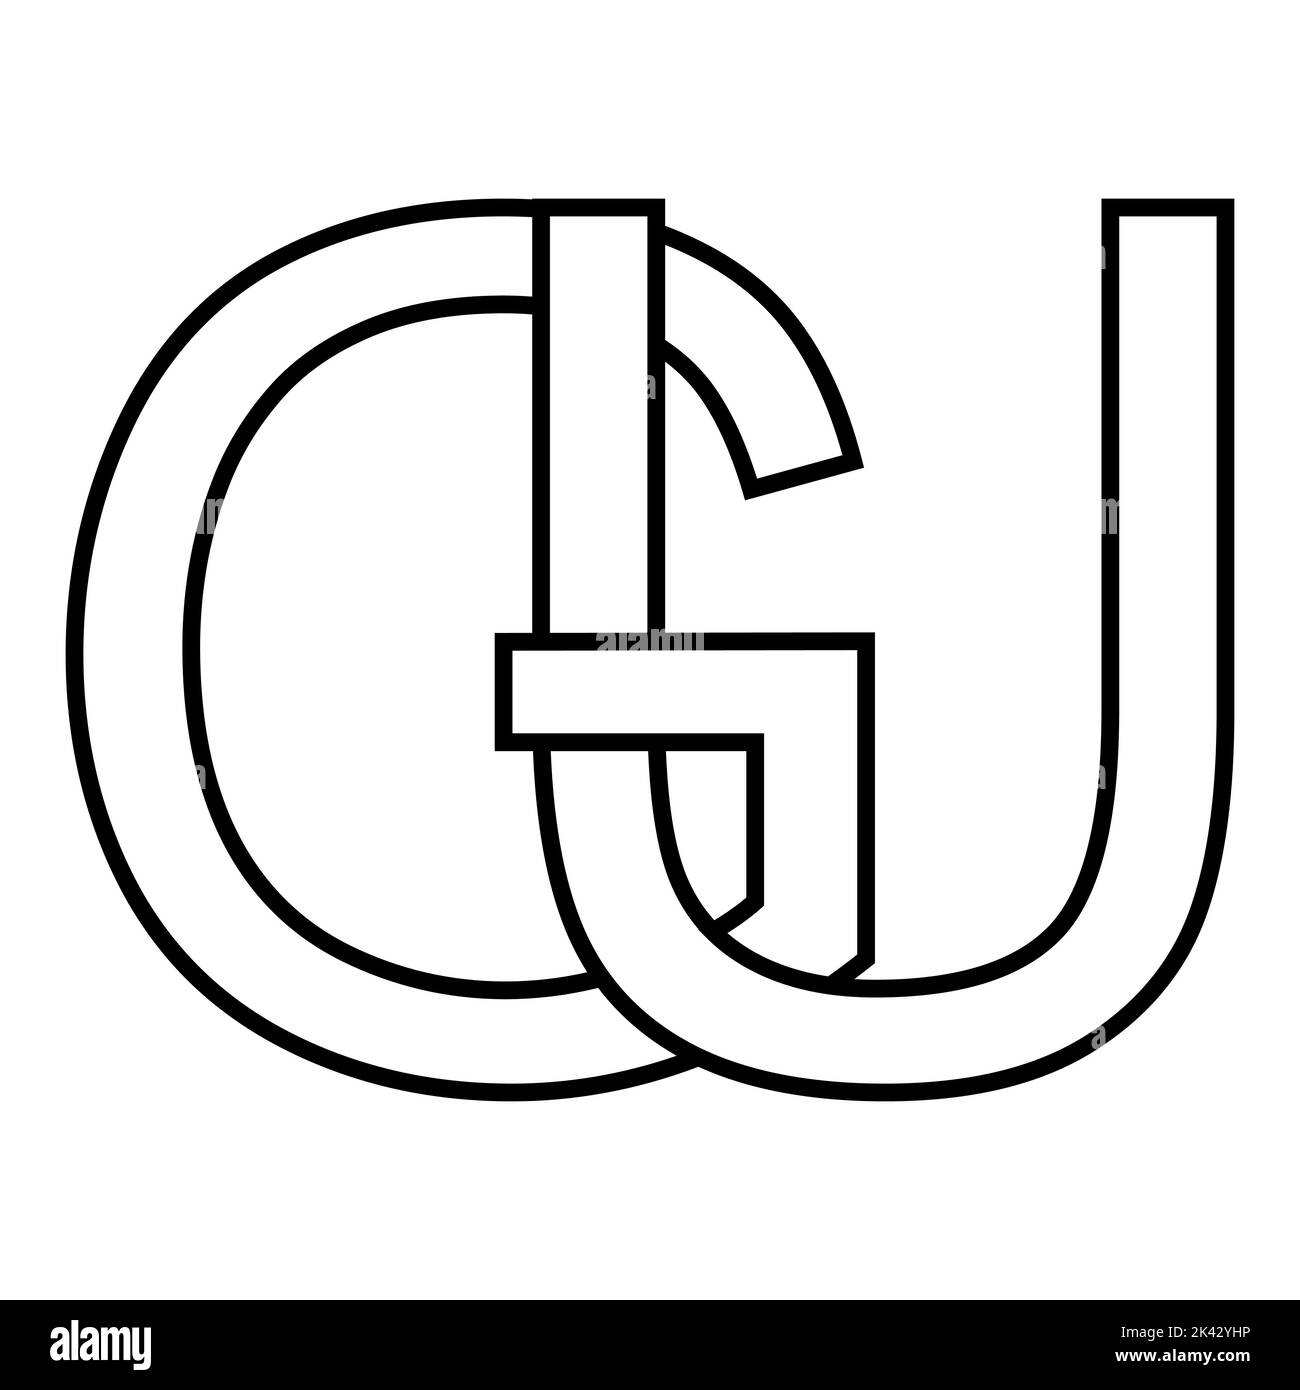 Logo sign gu ug icon nft interlaced letters g u Stock Vector